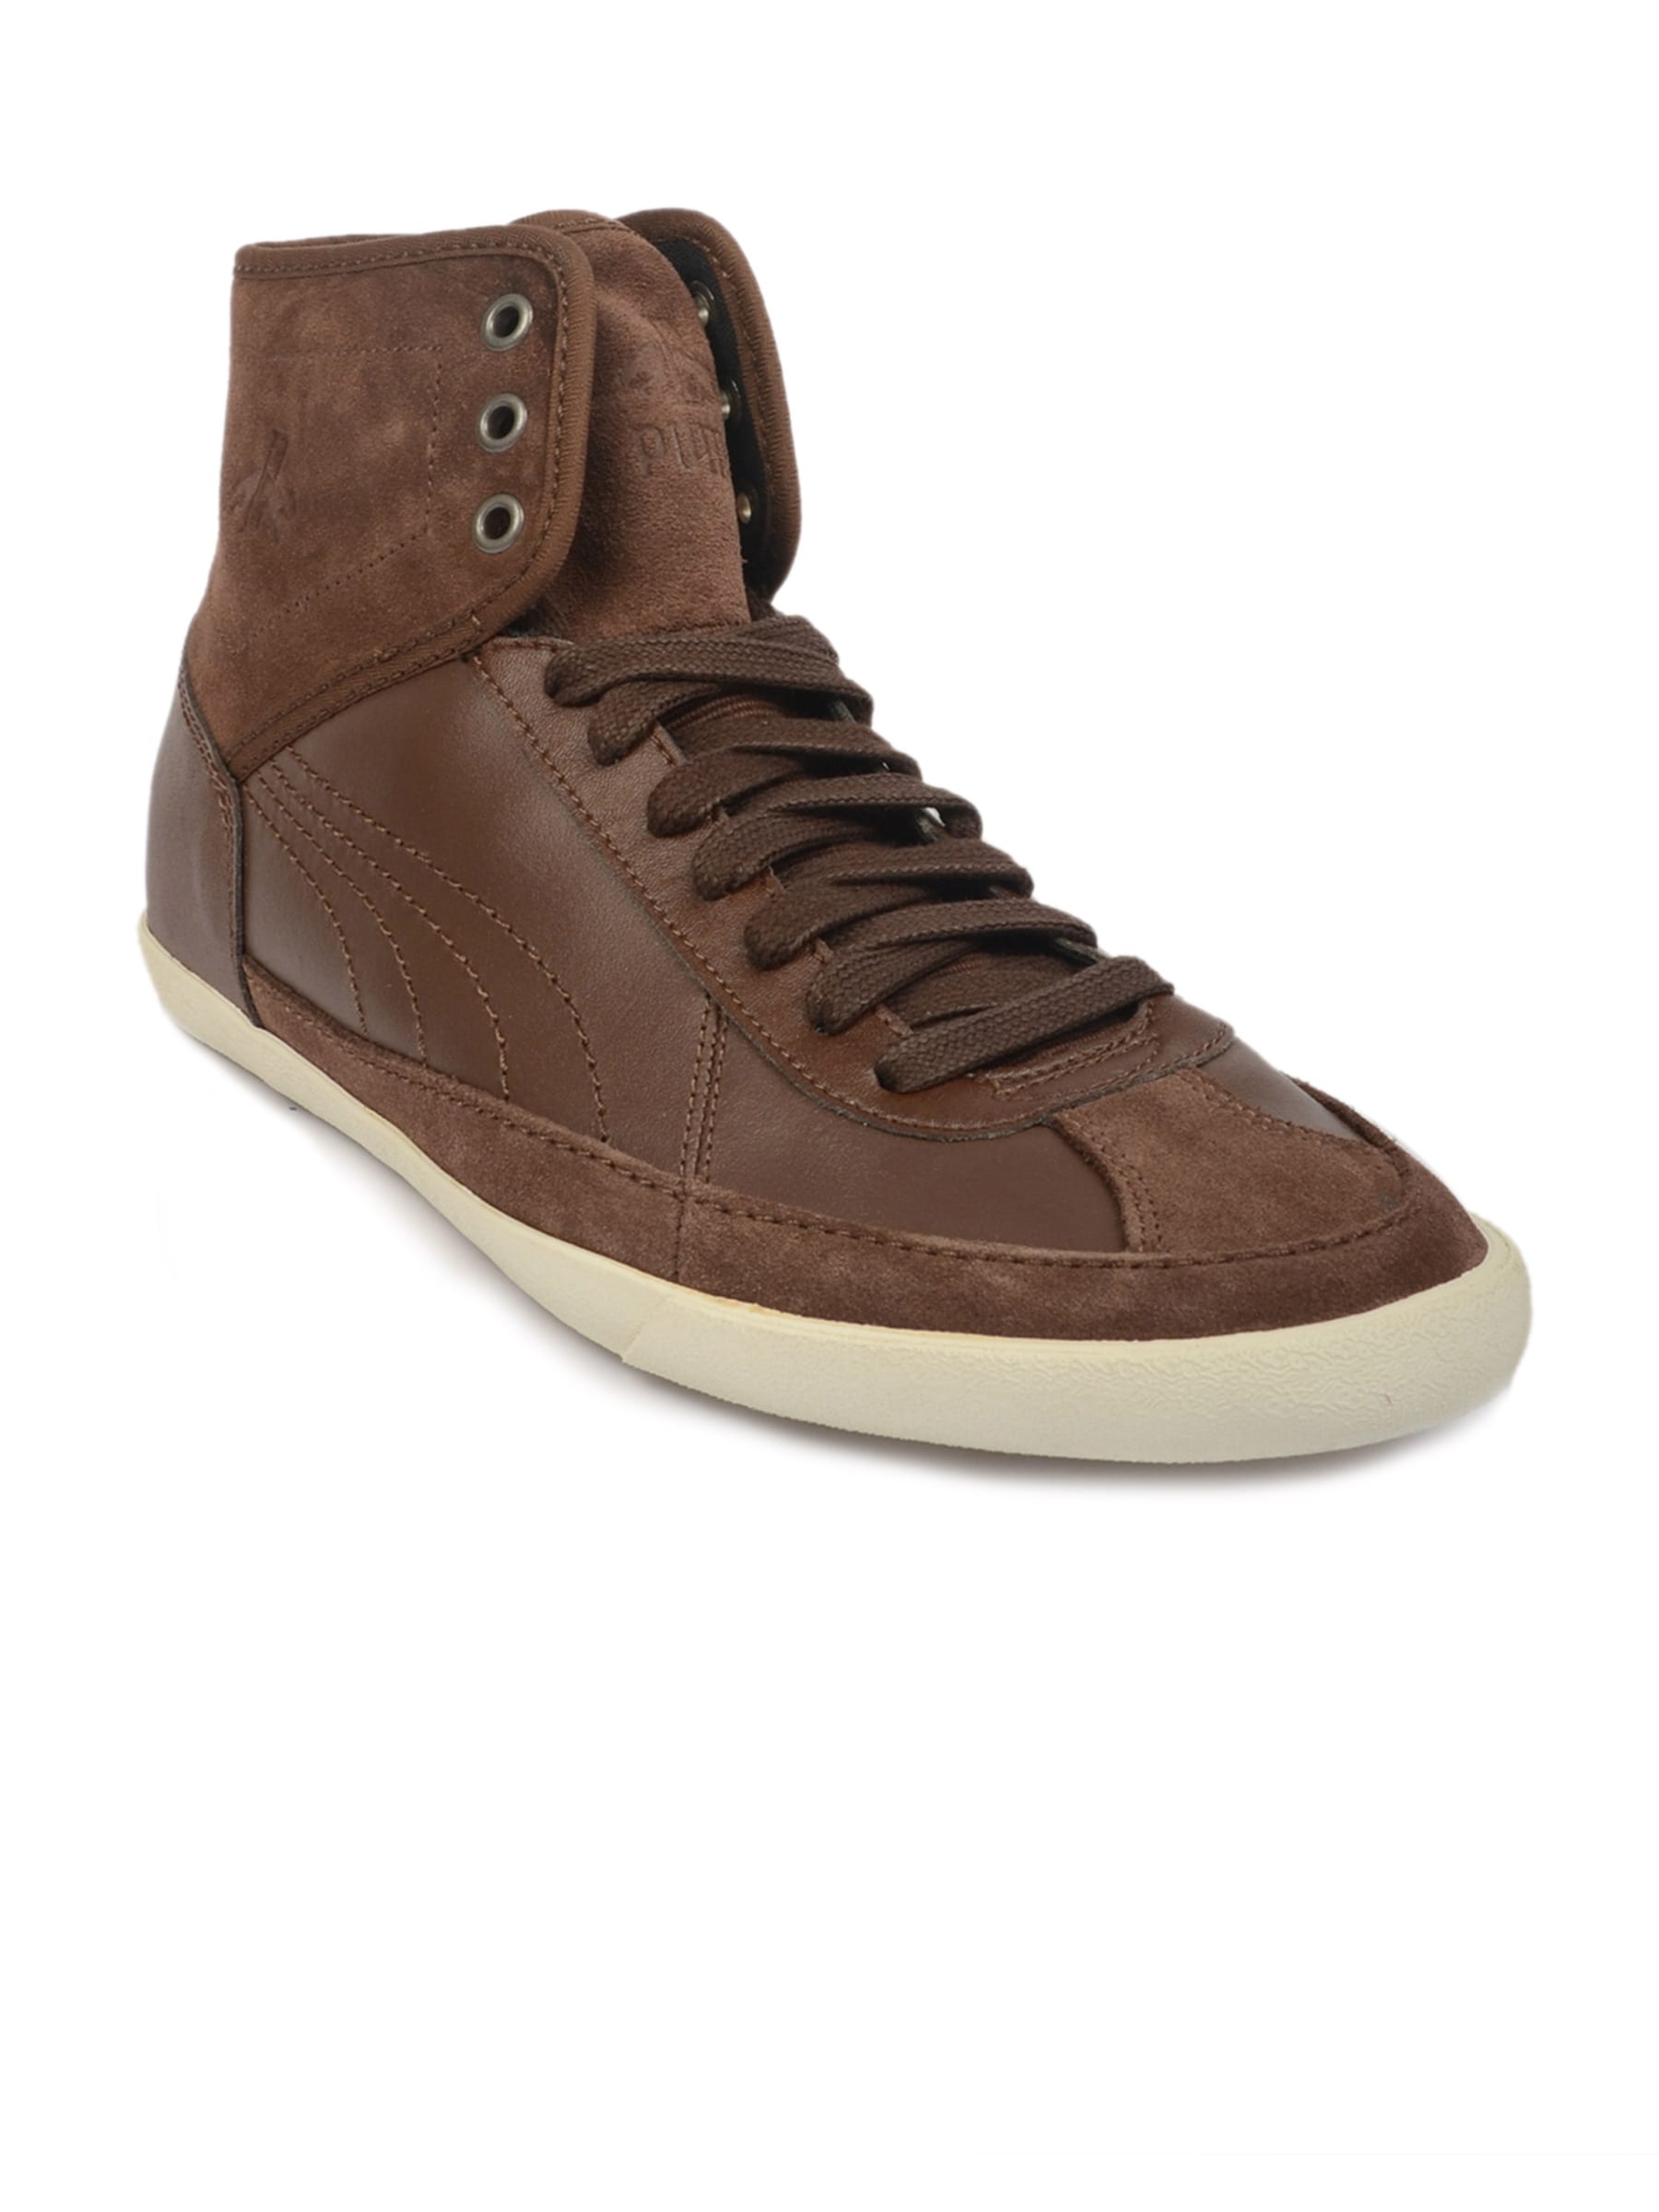 Puma Men Kollege Mid Brown Casual Shoes